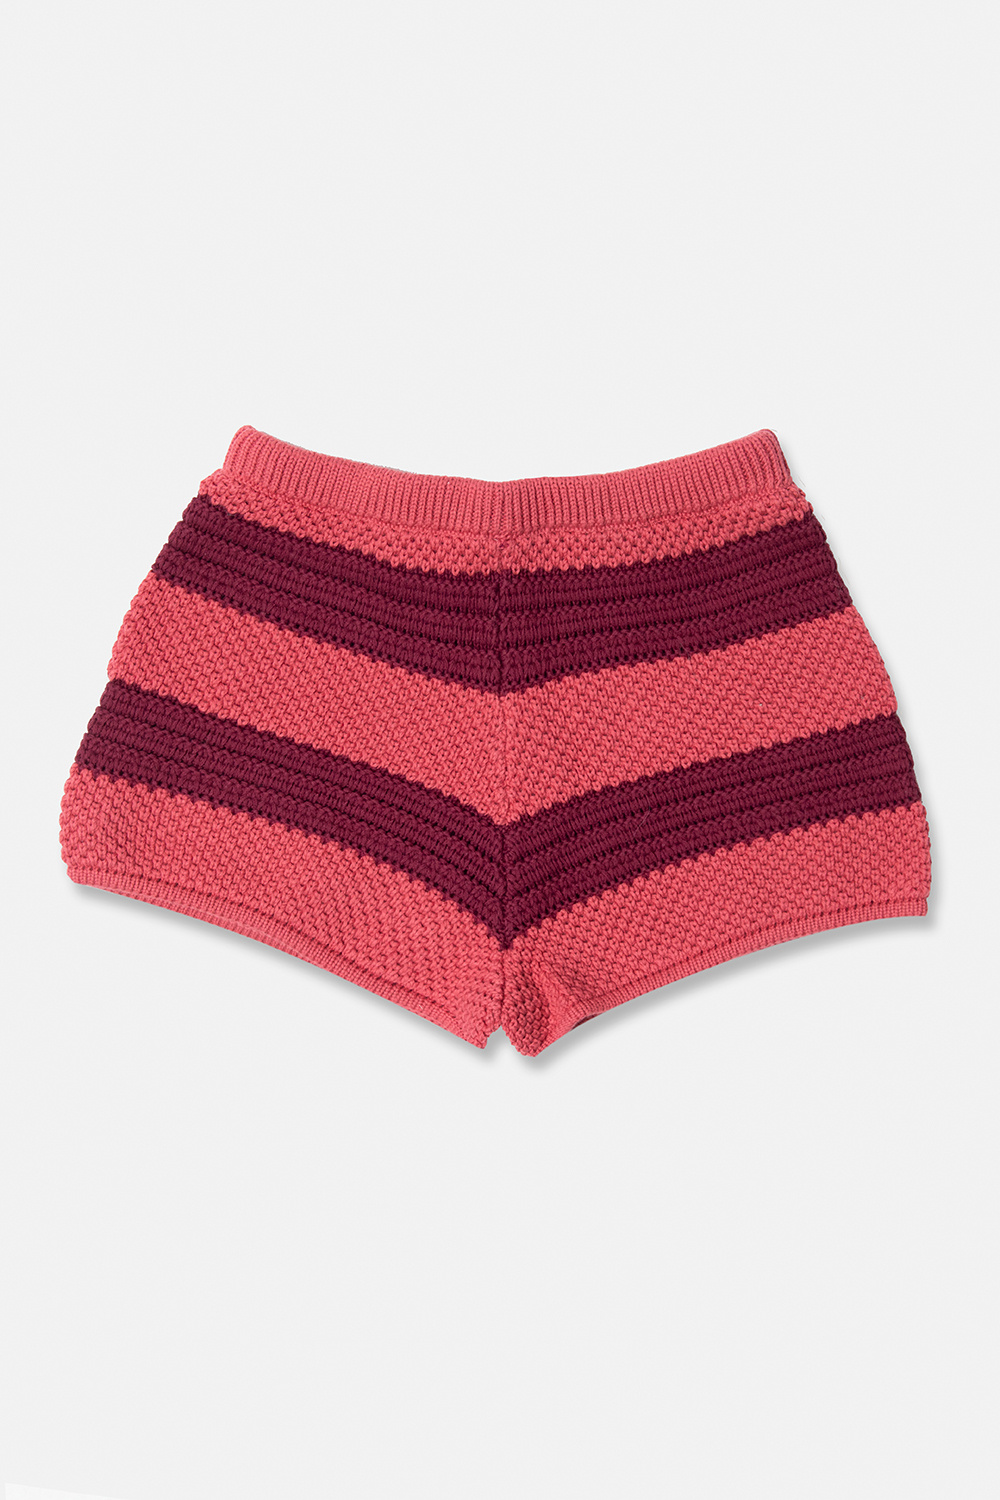 Zimmermann Kids Crochet Wei shorts